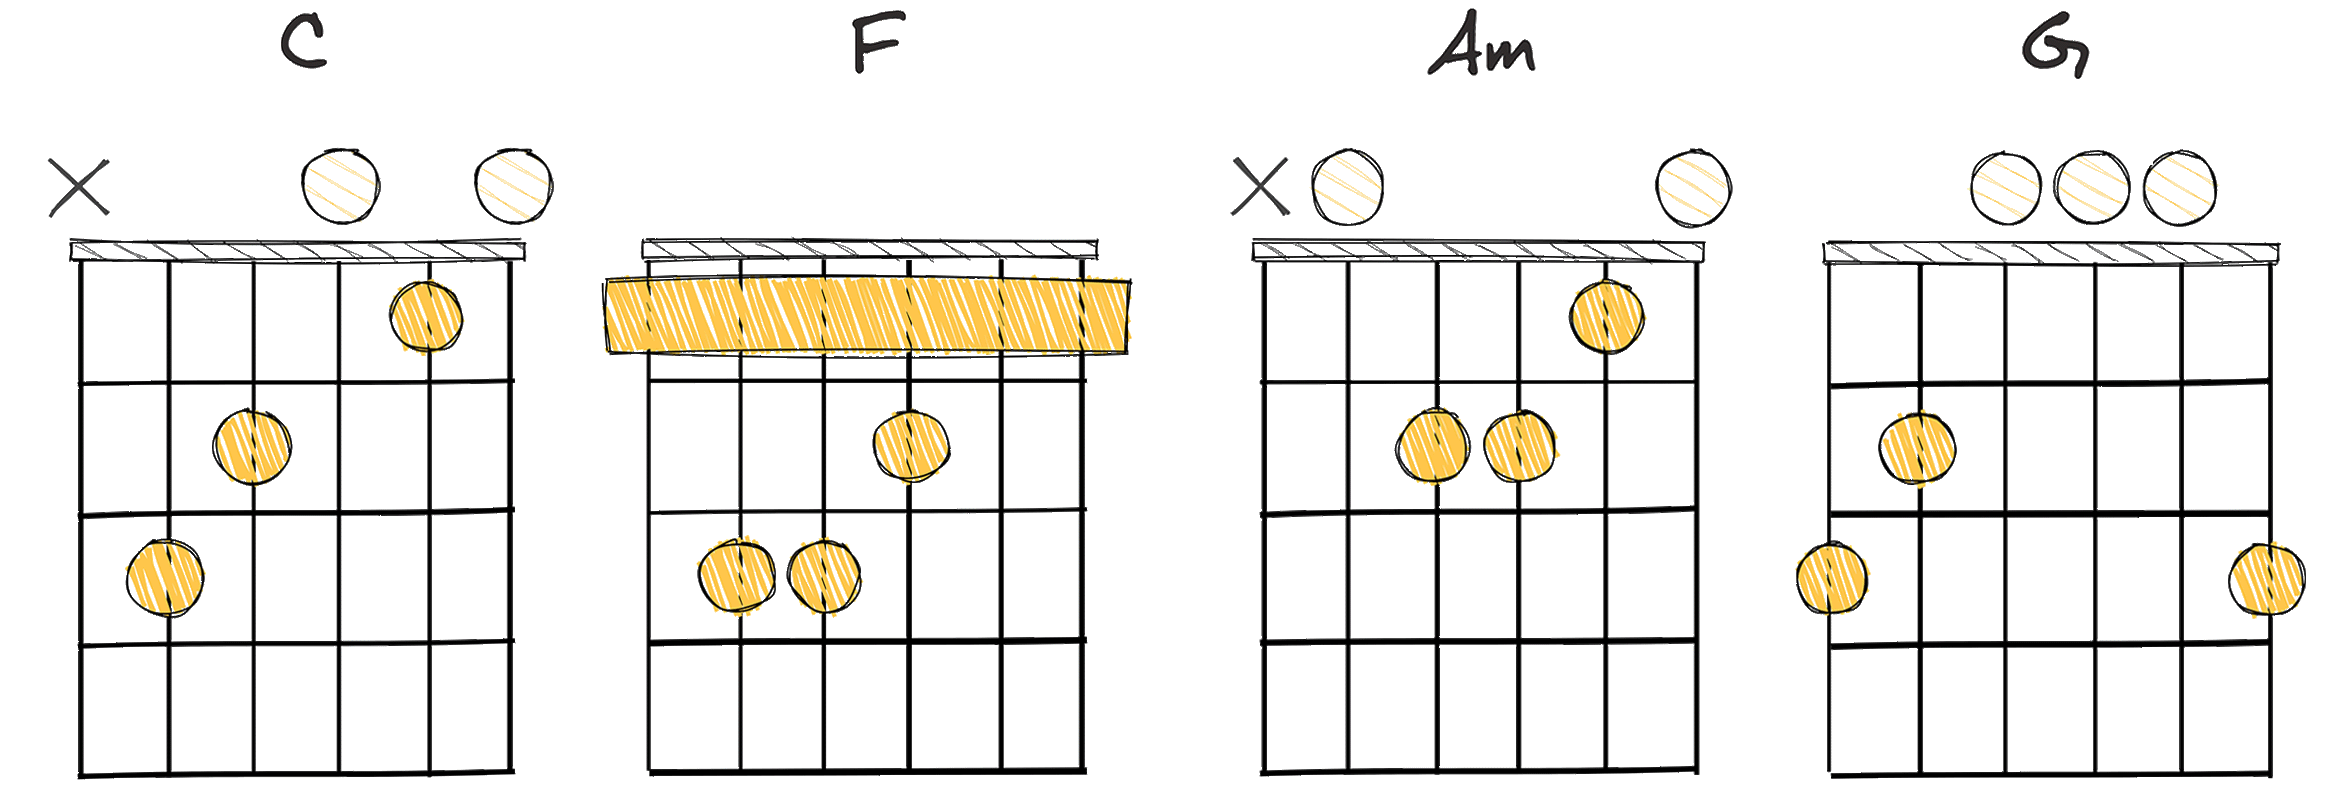 I - IV - vi - V (1-4-6-5) chords diagram